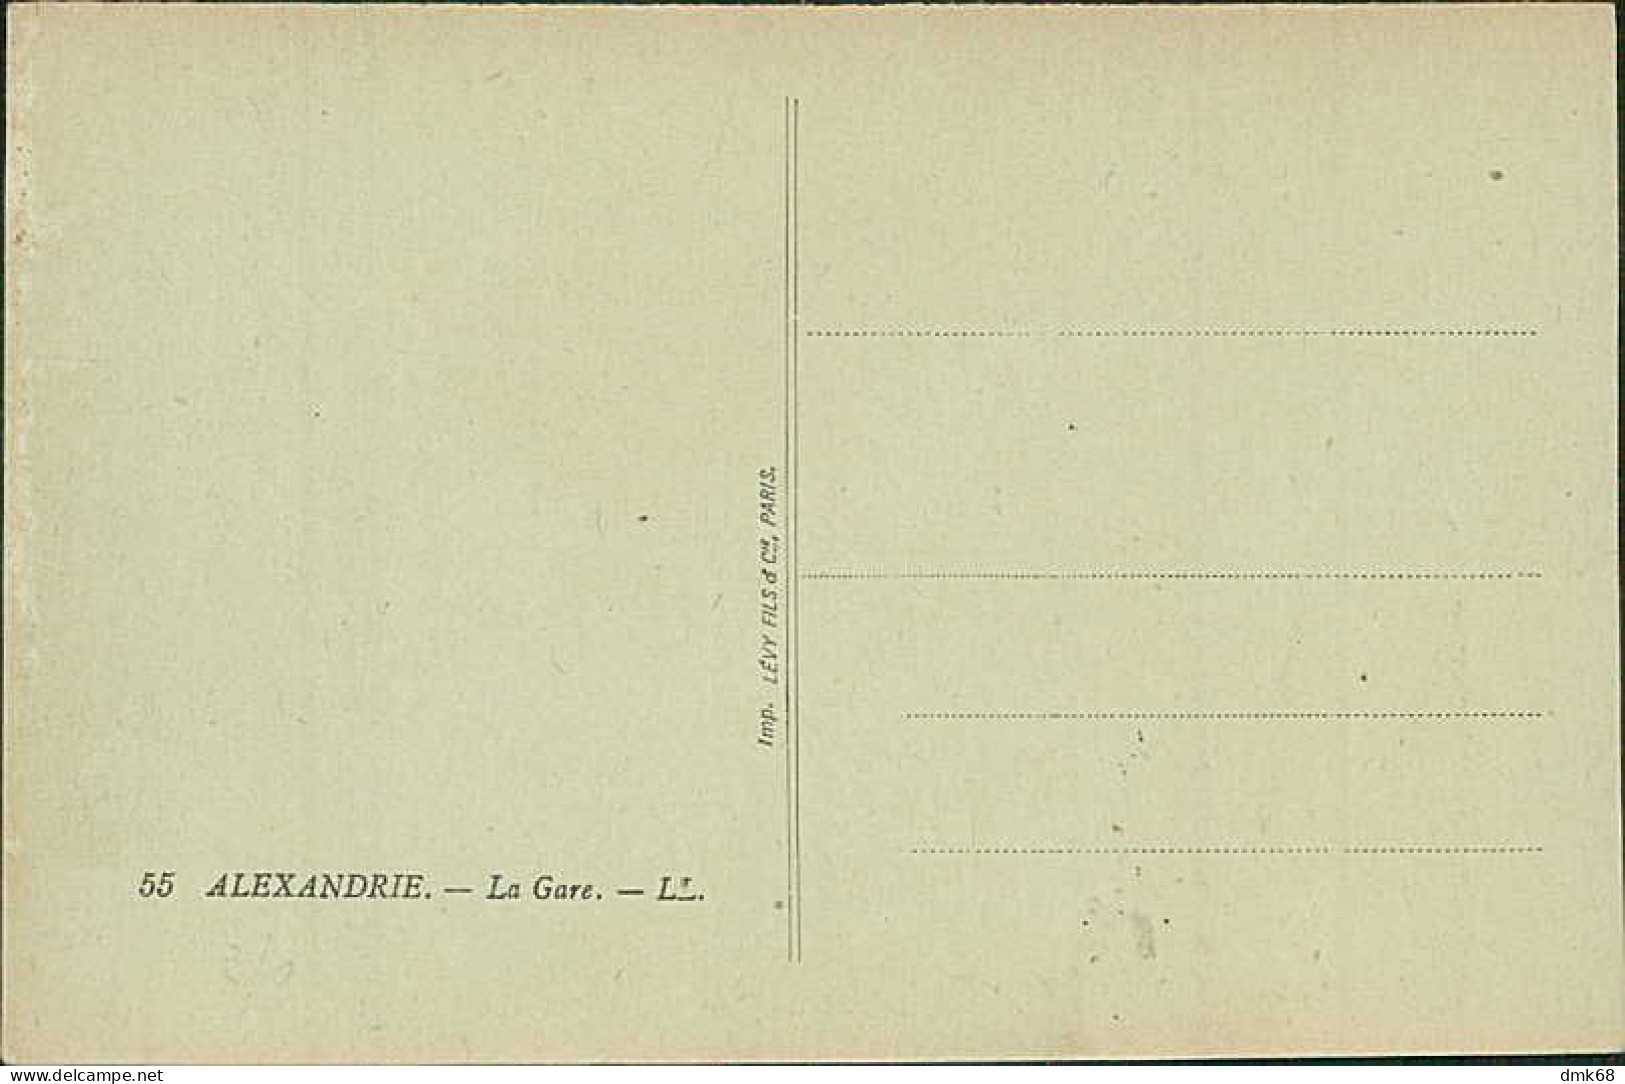 EGYPT - ALEXANDRIA / ALEXANDRIE - THE STATION - EDIT L.L. - 1910s (12633/3) - Alexandrie